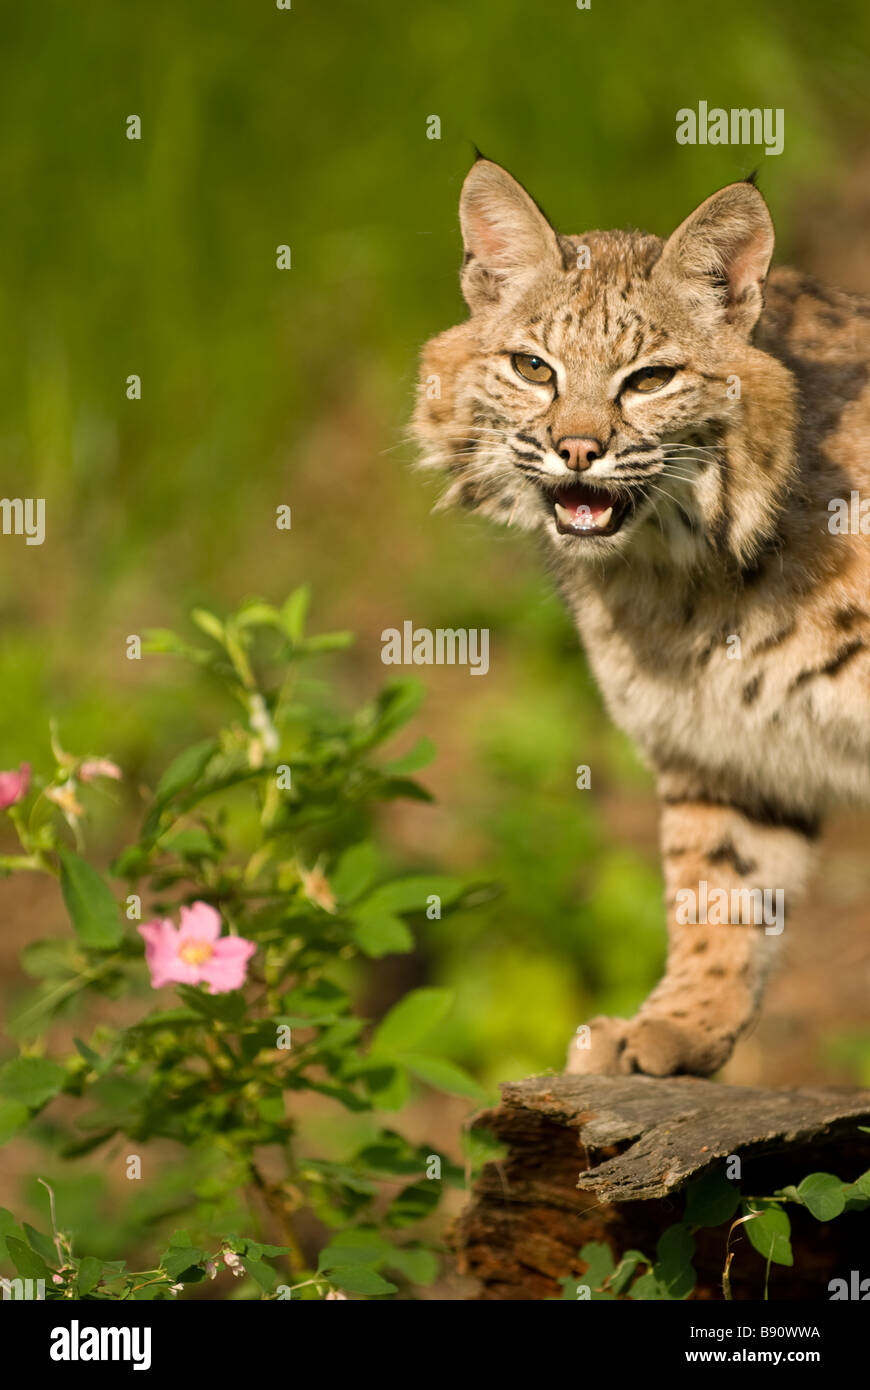 Adult bobcat growling at the camera Stock Photo